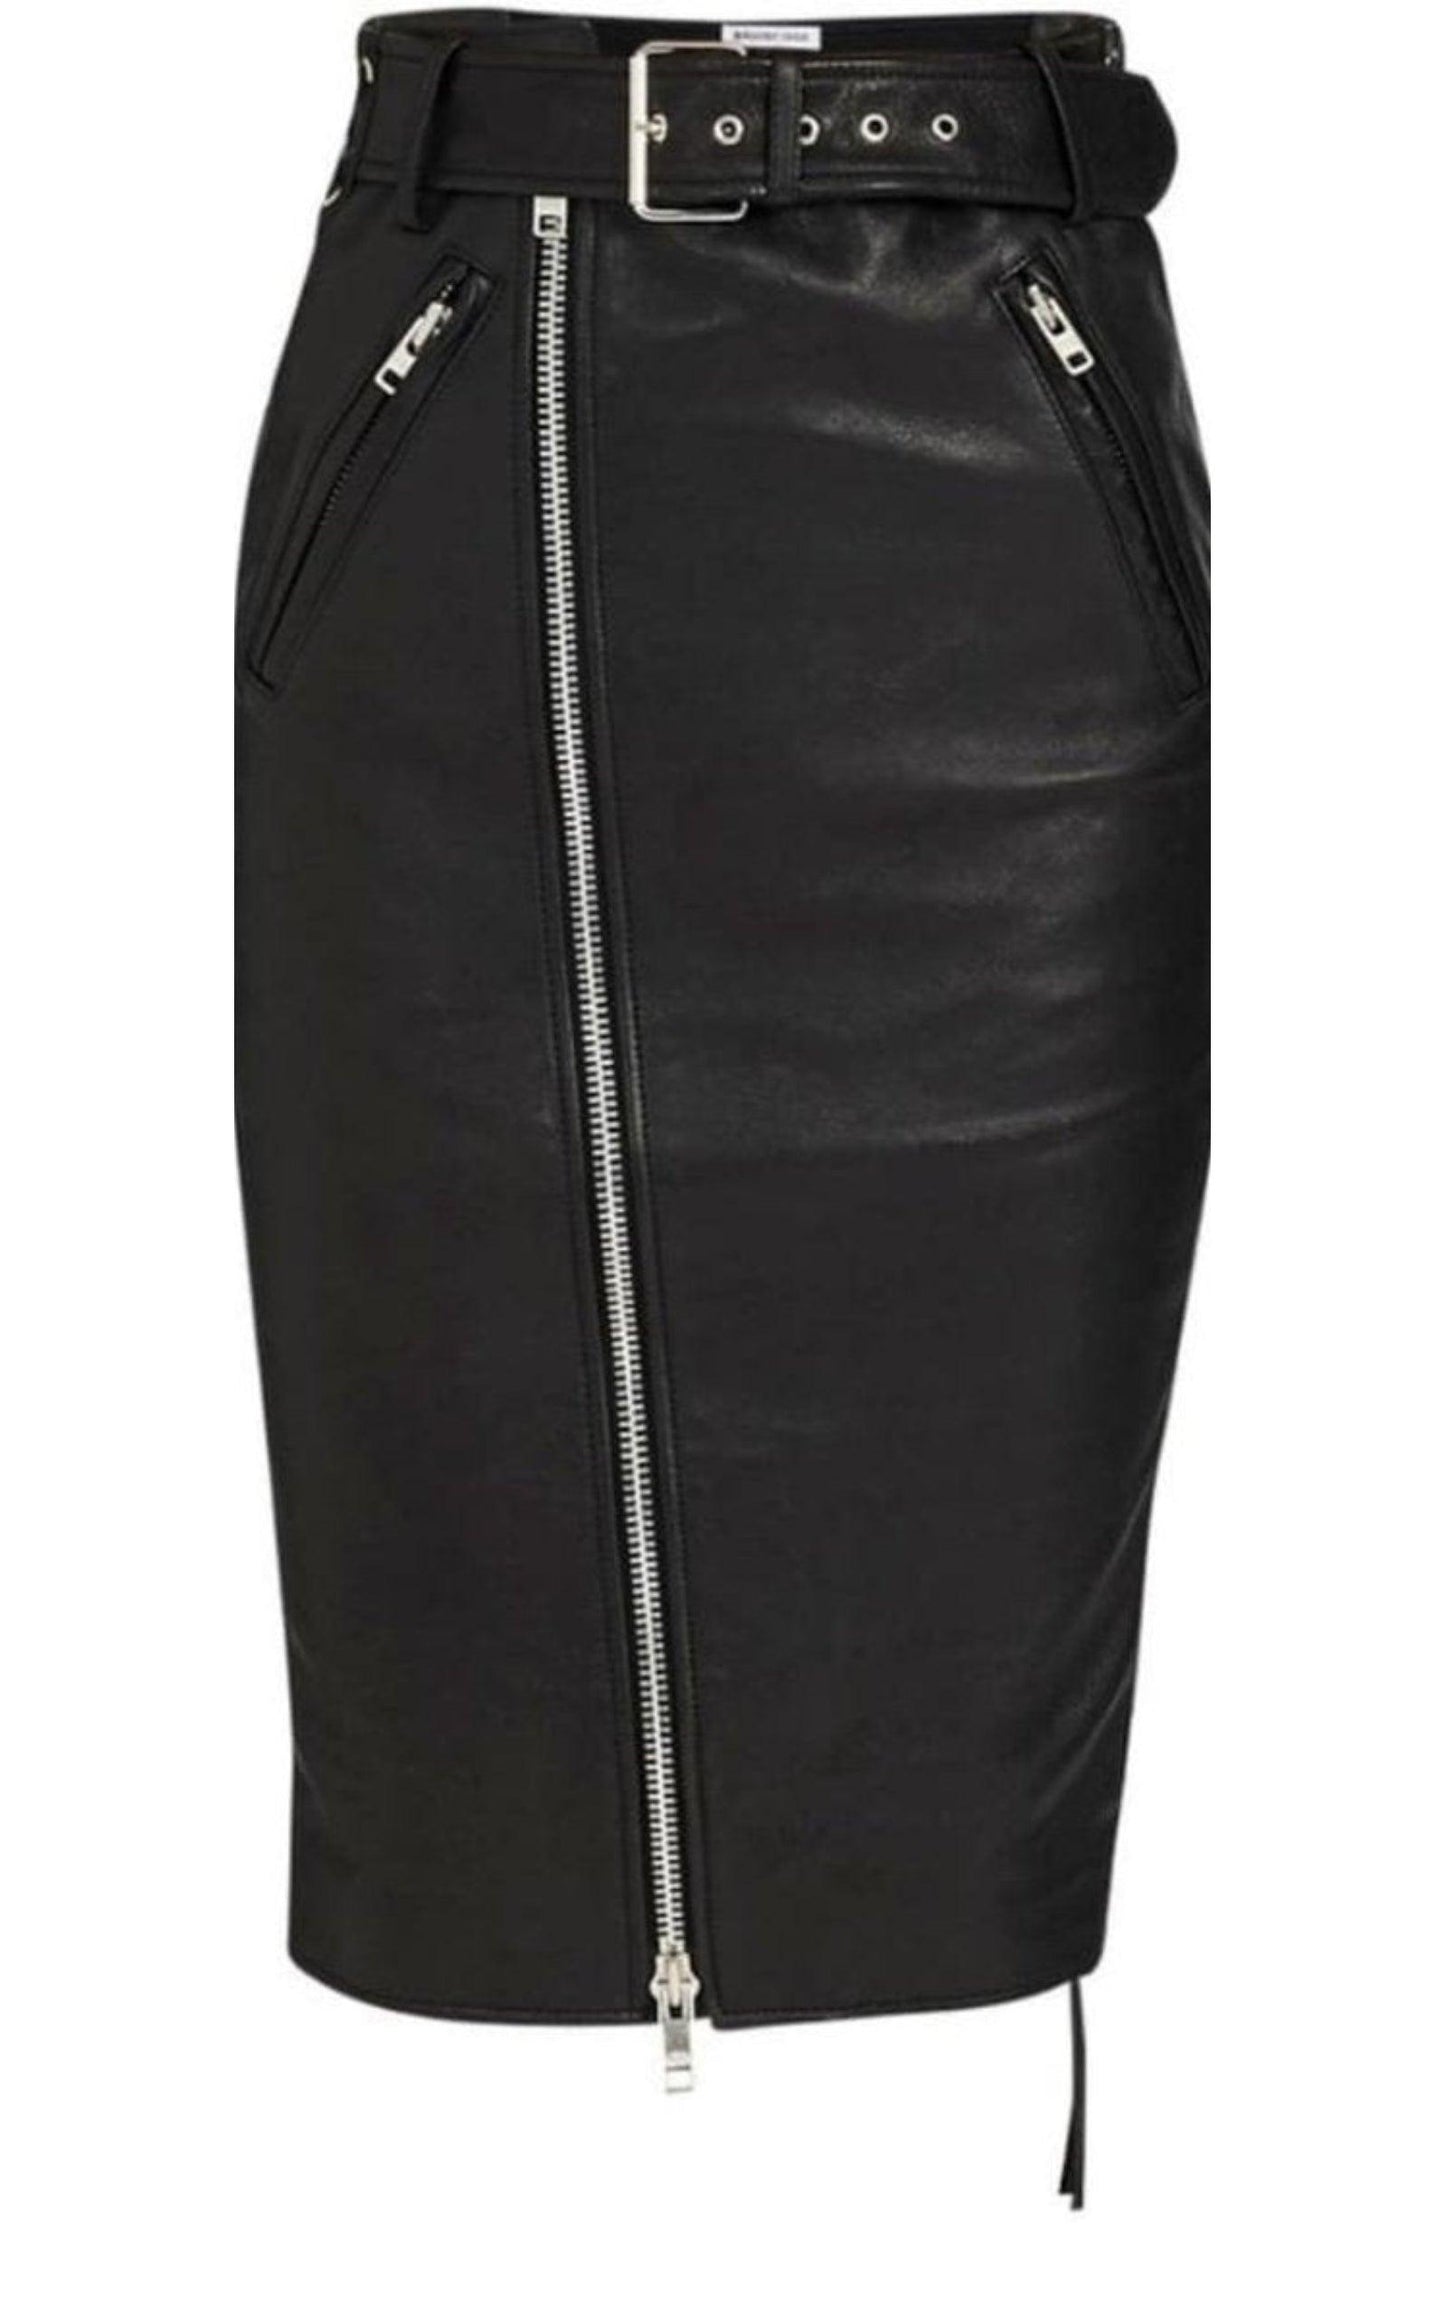  BalenciagaLeather Pencil Skirt - Runway Catalog